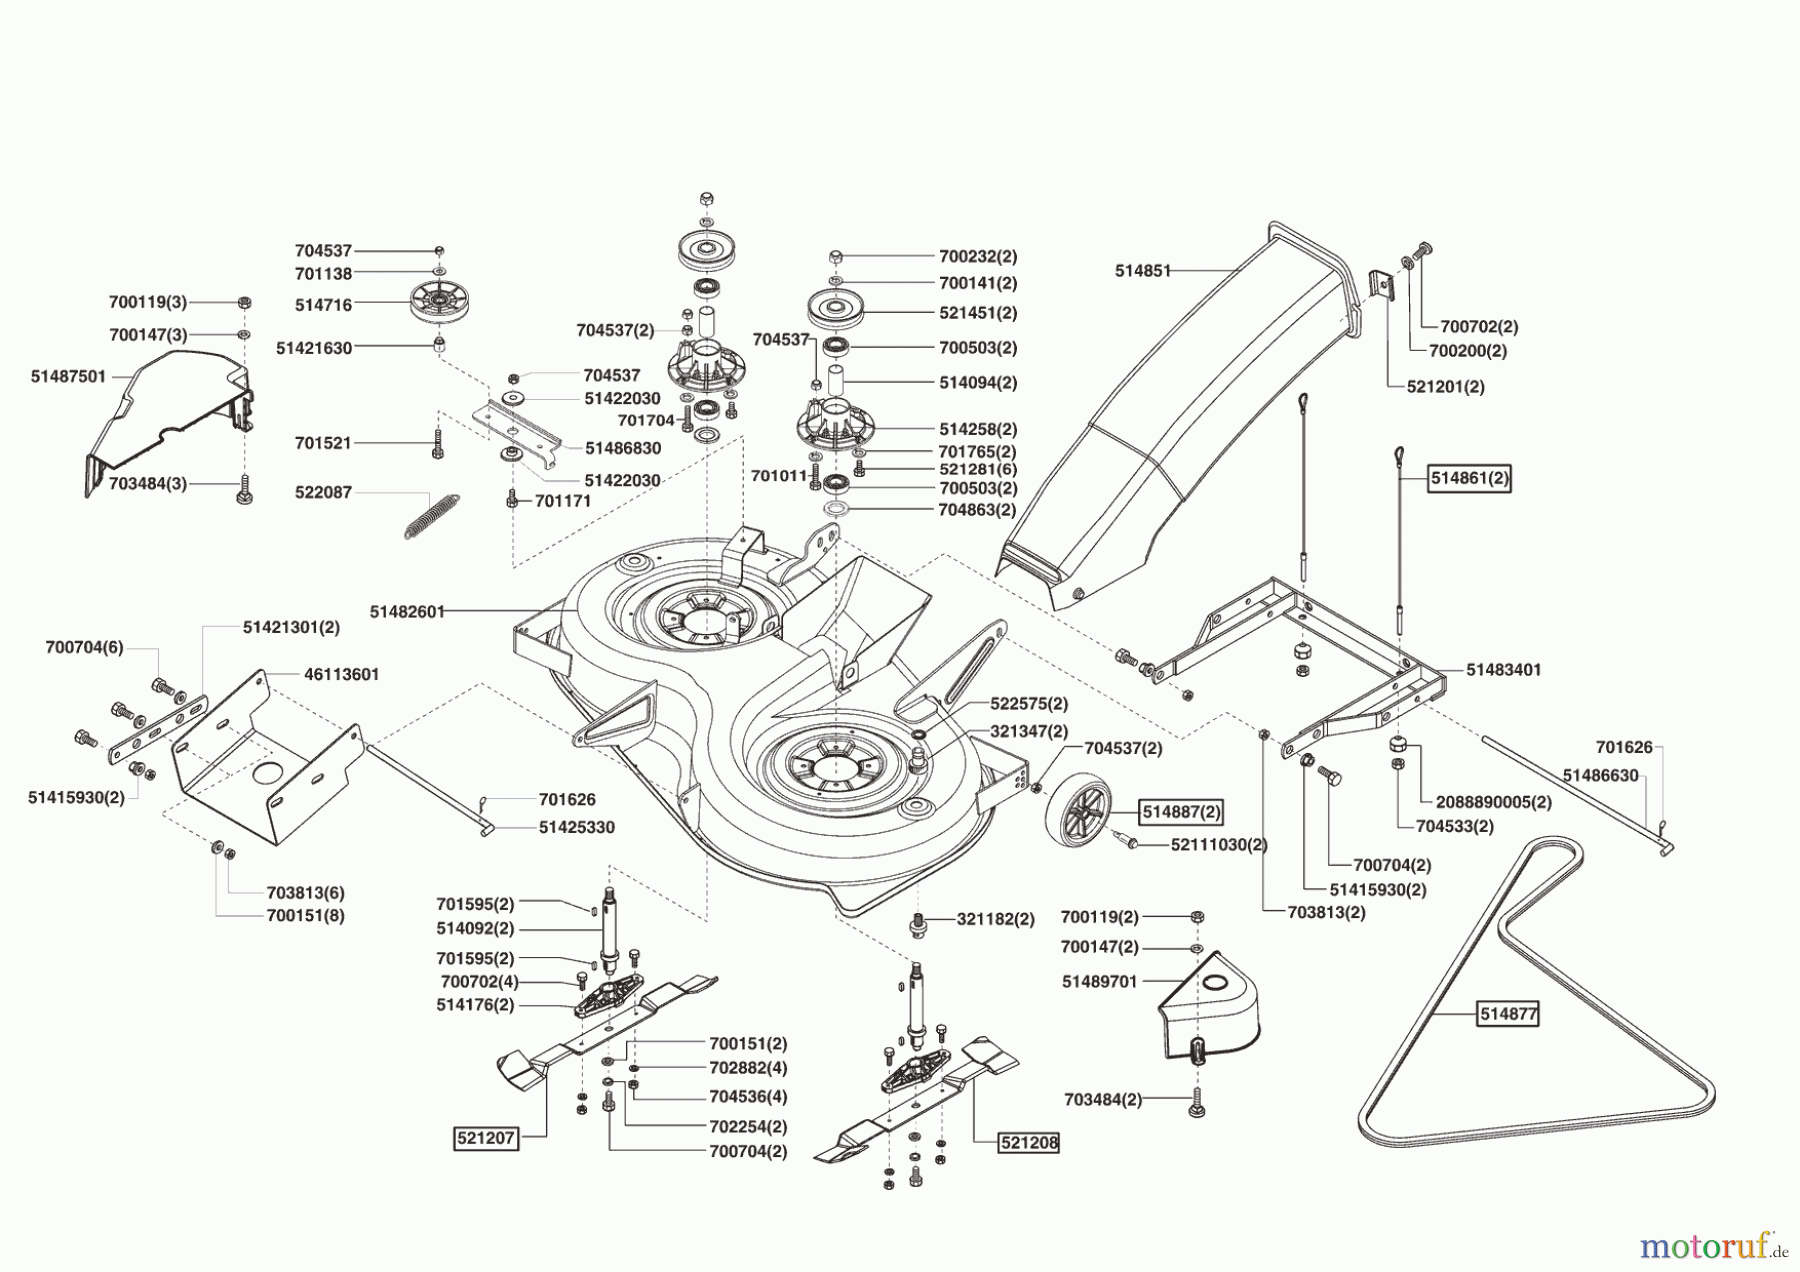  AL-KO Gartentechnik Rasentraktor T18/102HD MARINA Seite 5